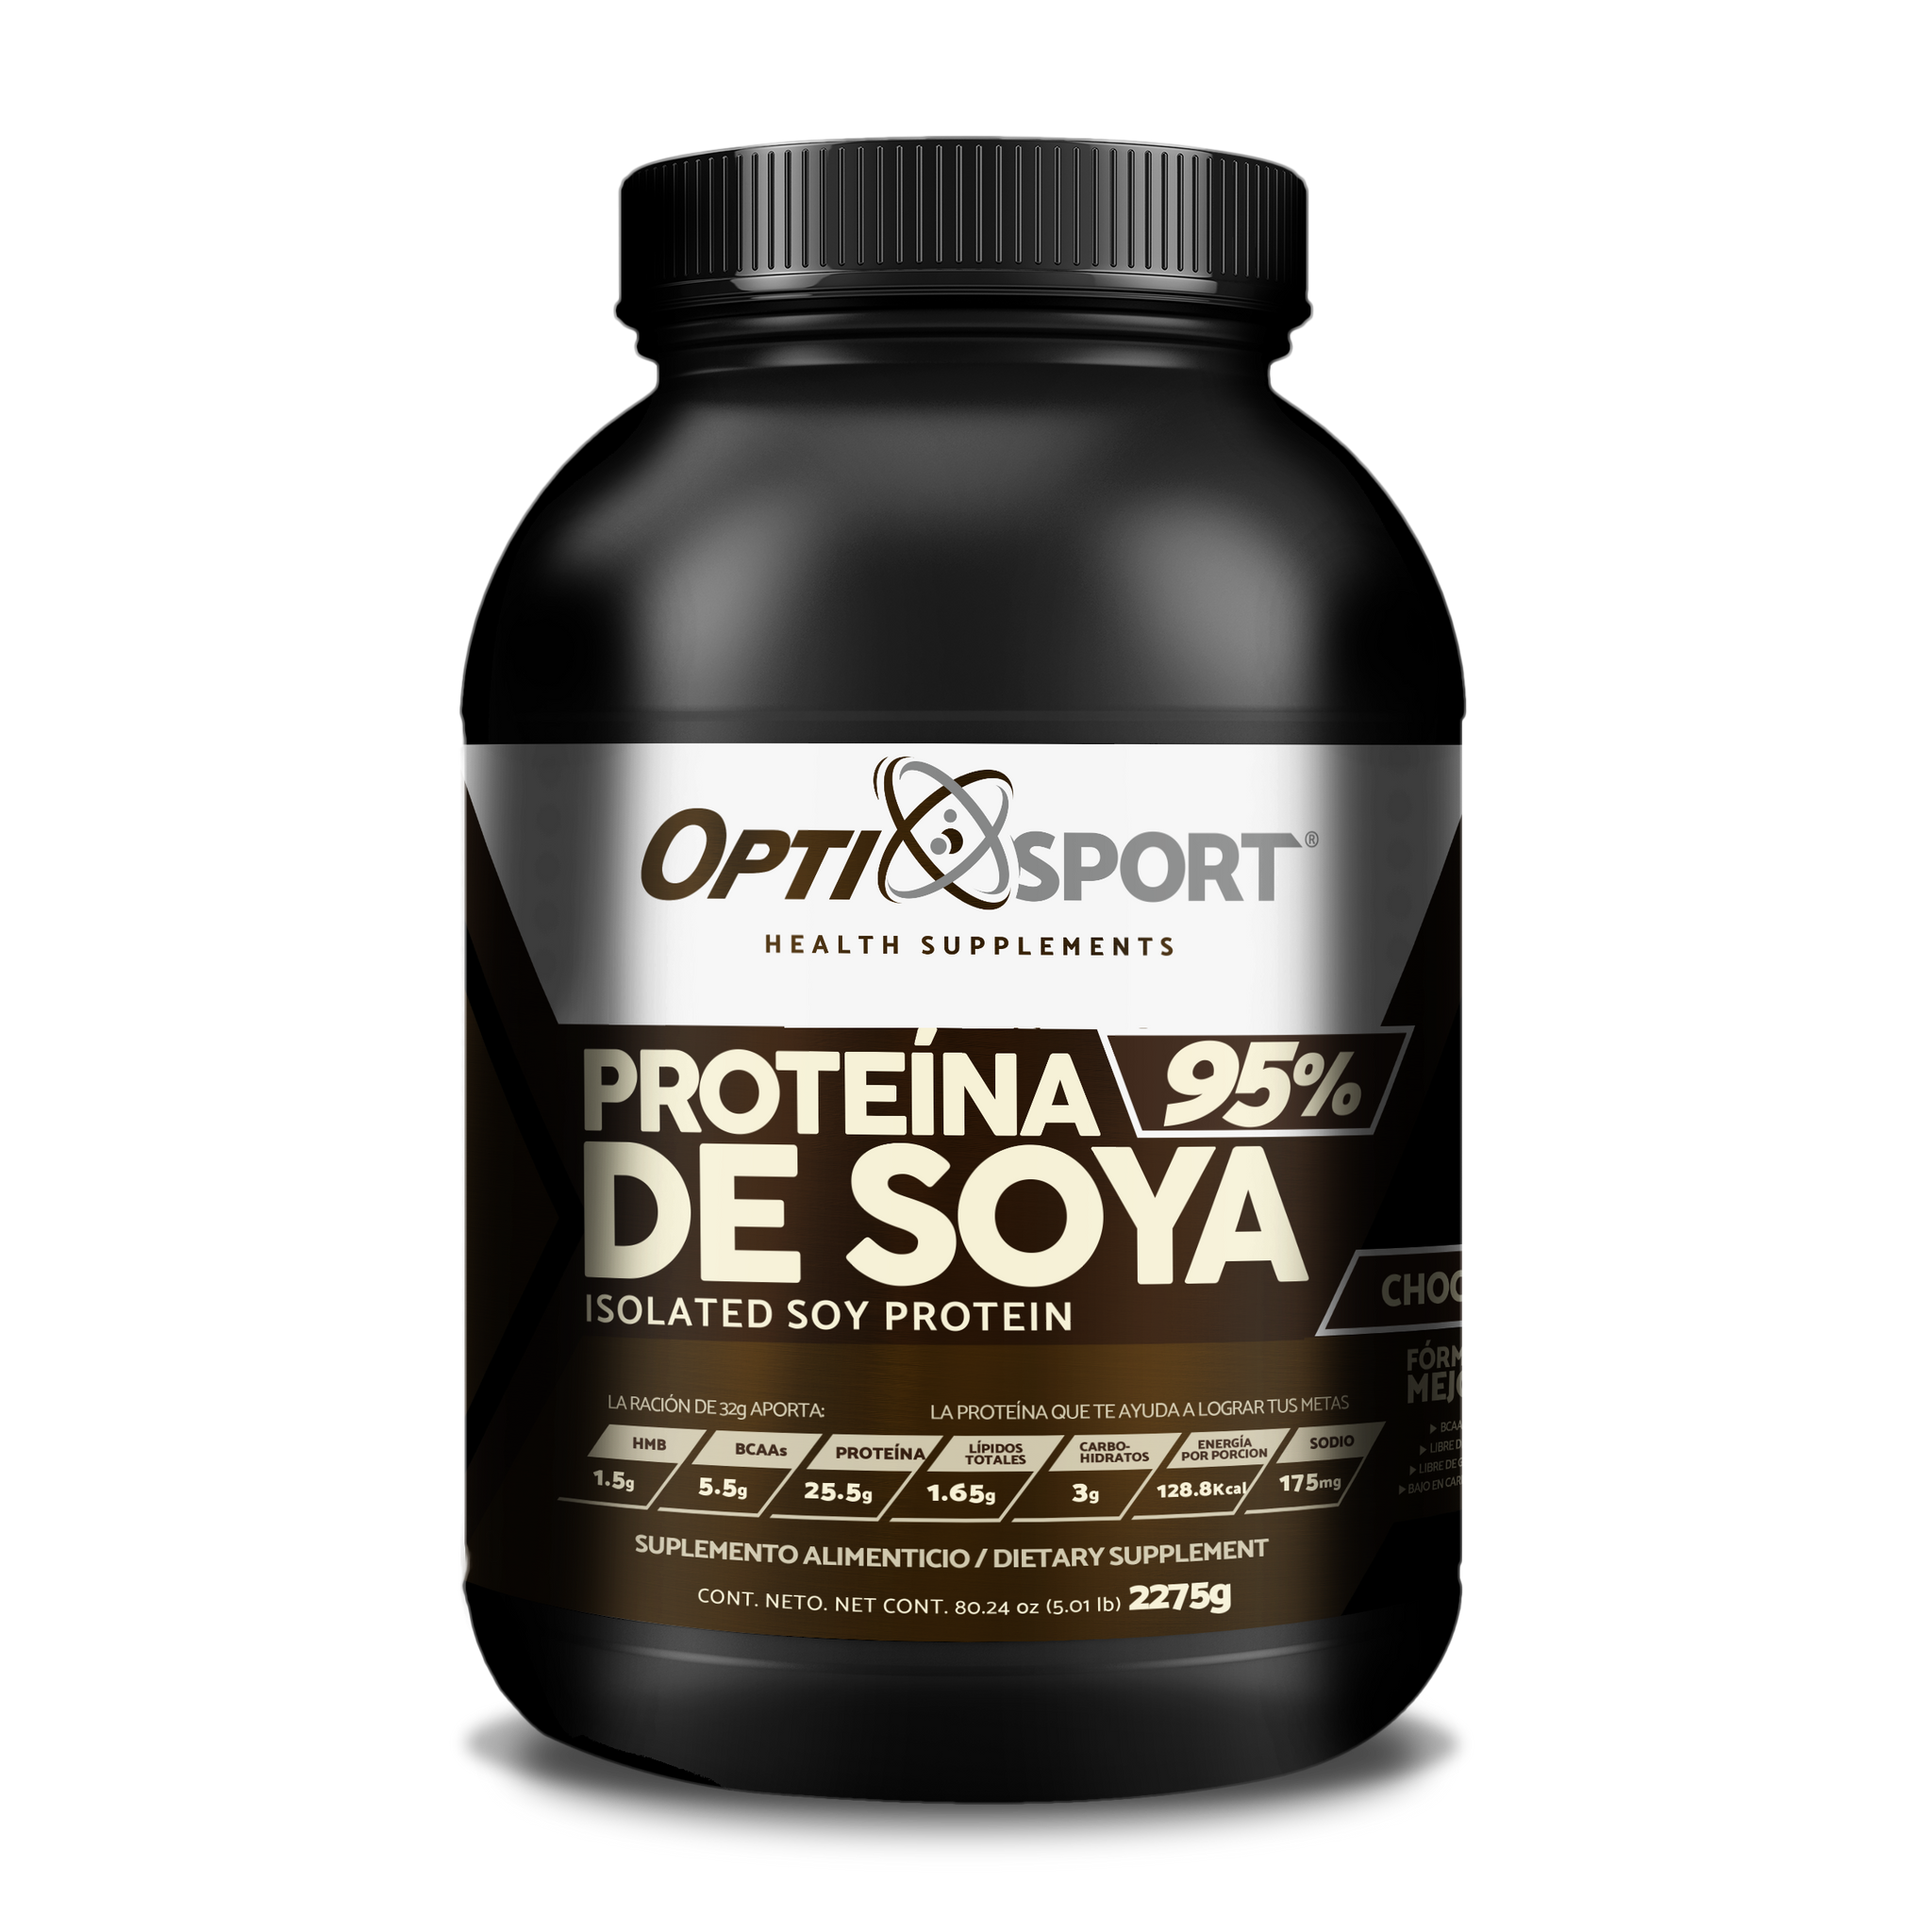 SOYA95 OptiSport Proteína de Soya +HMB + BCAAs, que NO Inflama, 25.5 g de proteína por servicio, 39 servicios | Sabor Chocolate | Bote con 1250 gr | Suplemento en Polvo | Proteína de Soya